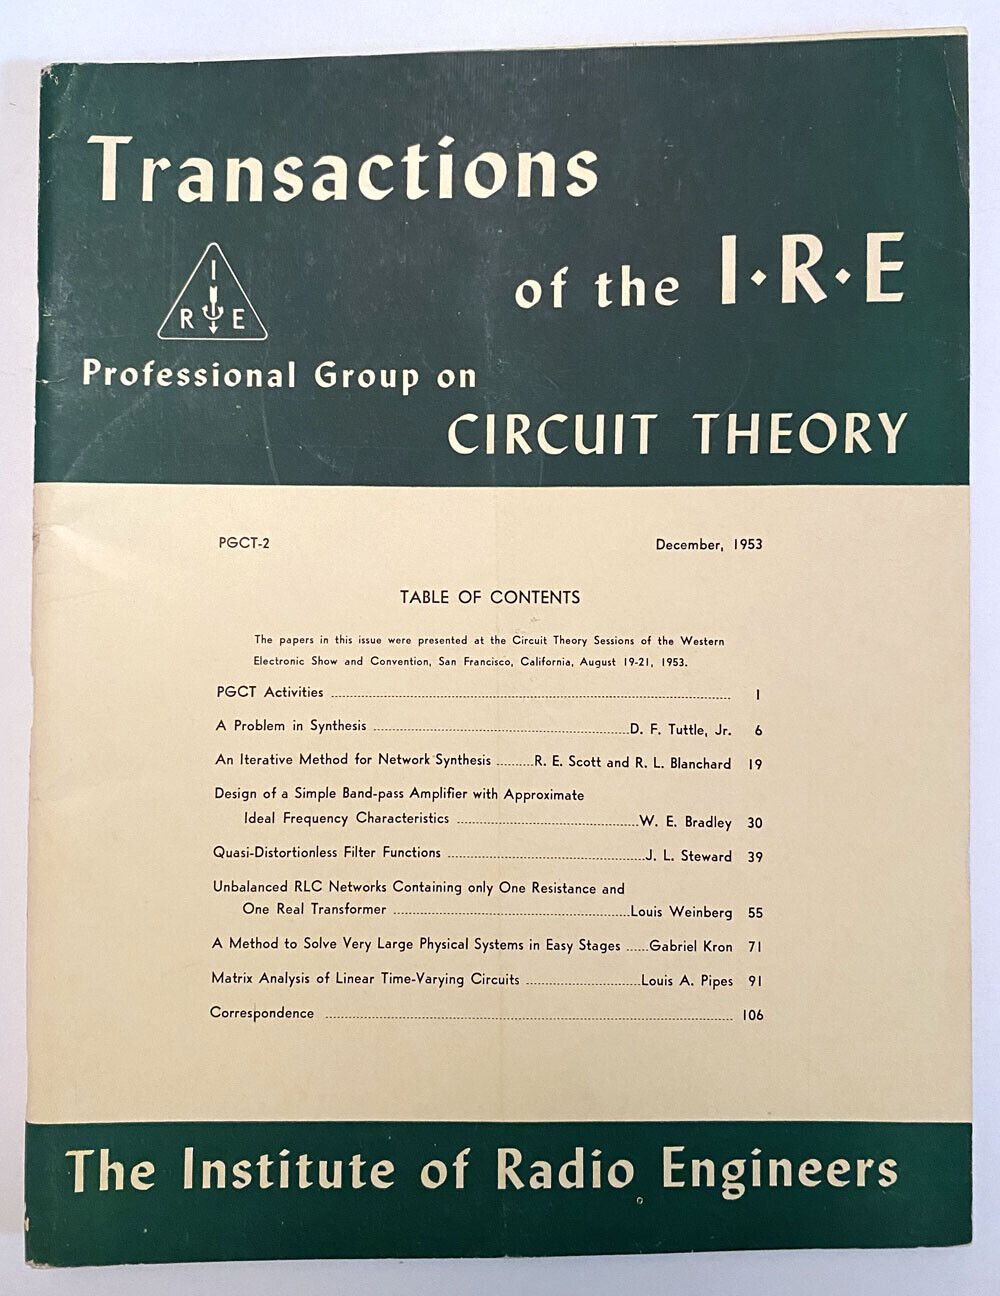 Transactions Of The I.R.E. Circuit Theory PGCT-2 Dec. 1953 Nice Rare